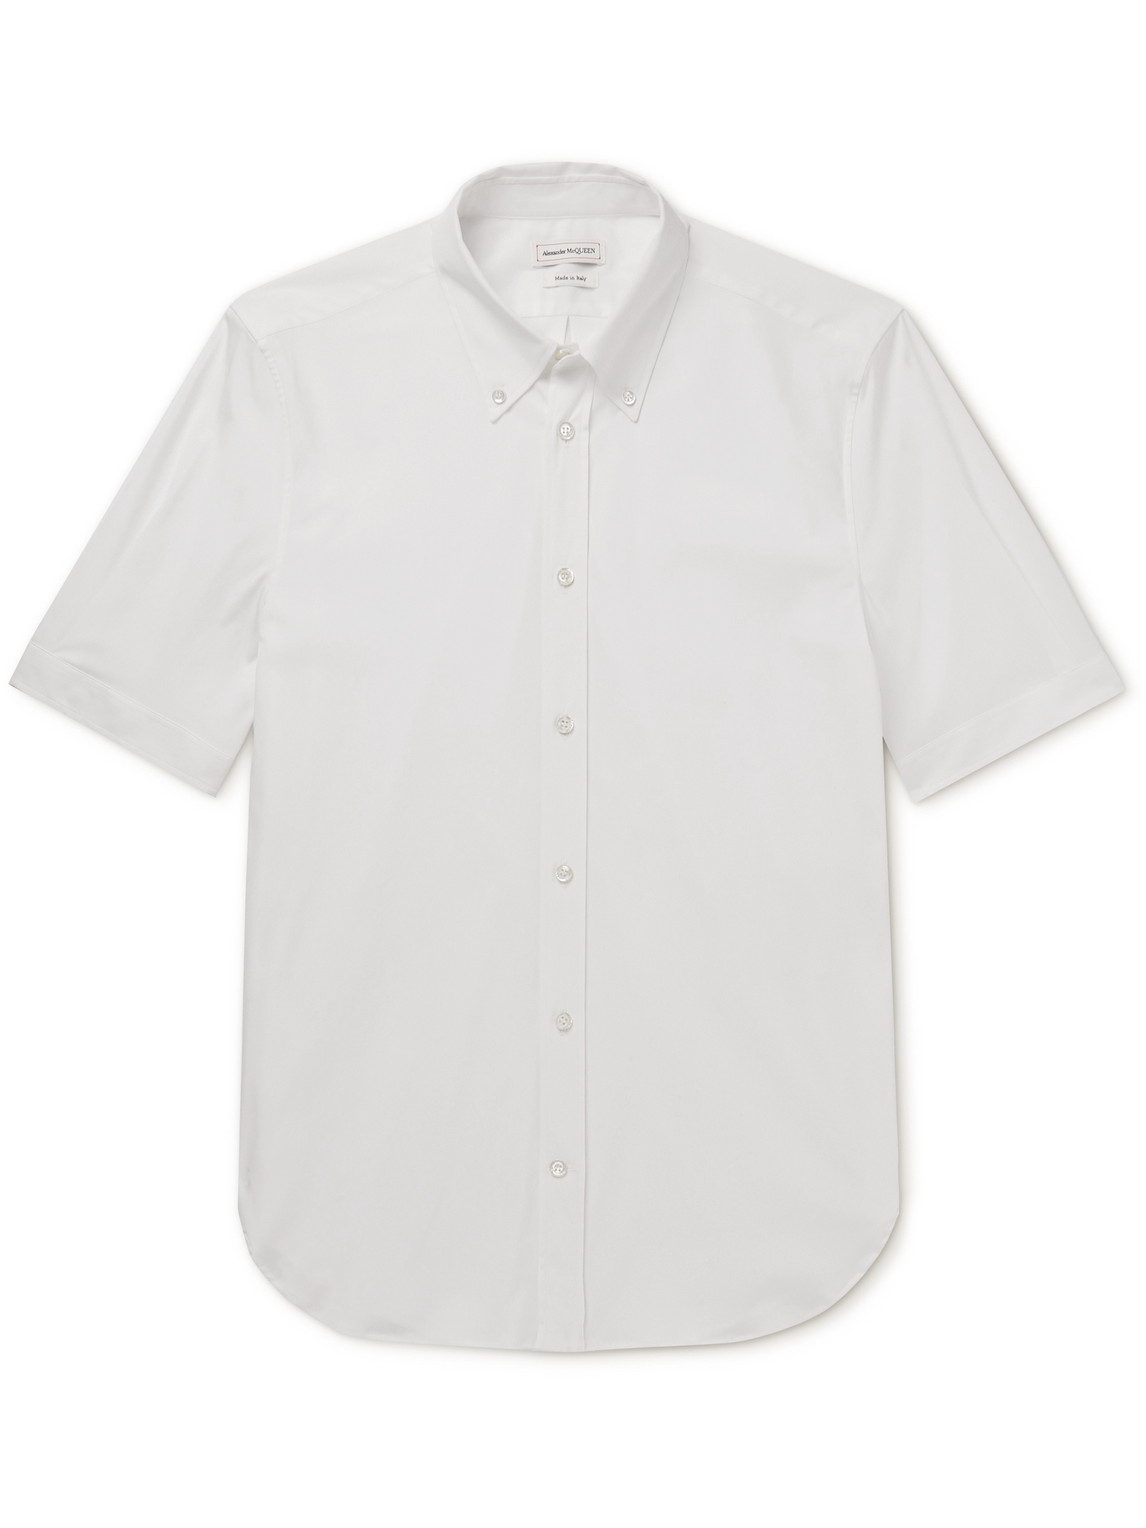 Alexander Mcqueen Brad Pitt Button-down Collar Cotton-blend Poplin Shirt In White